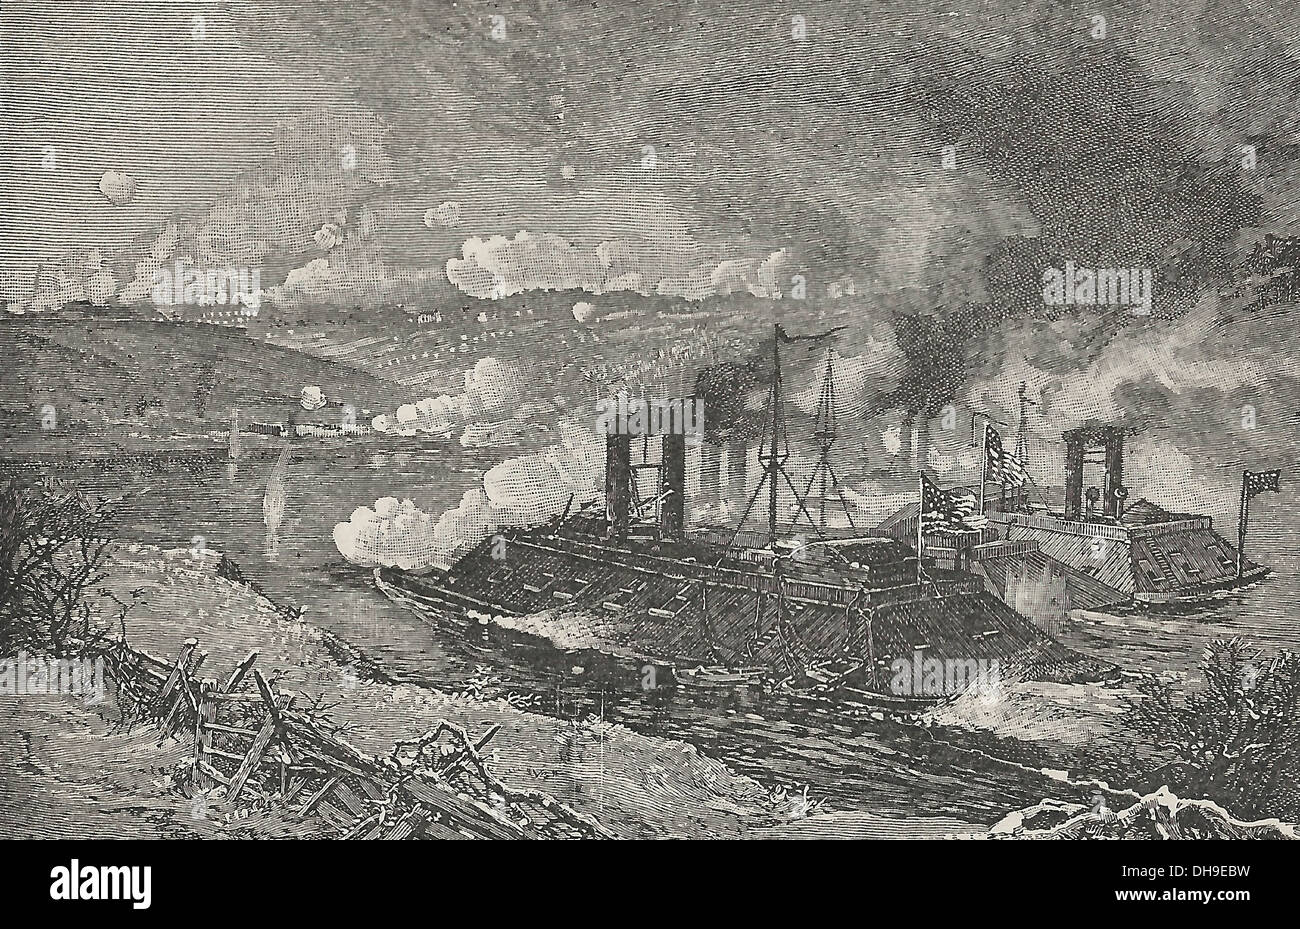 Der Angriff auf Fort Donelson, Februar 1862, USA Bürgerkrieg Stockfoto